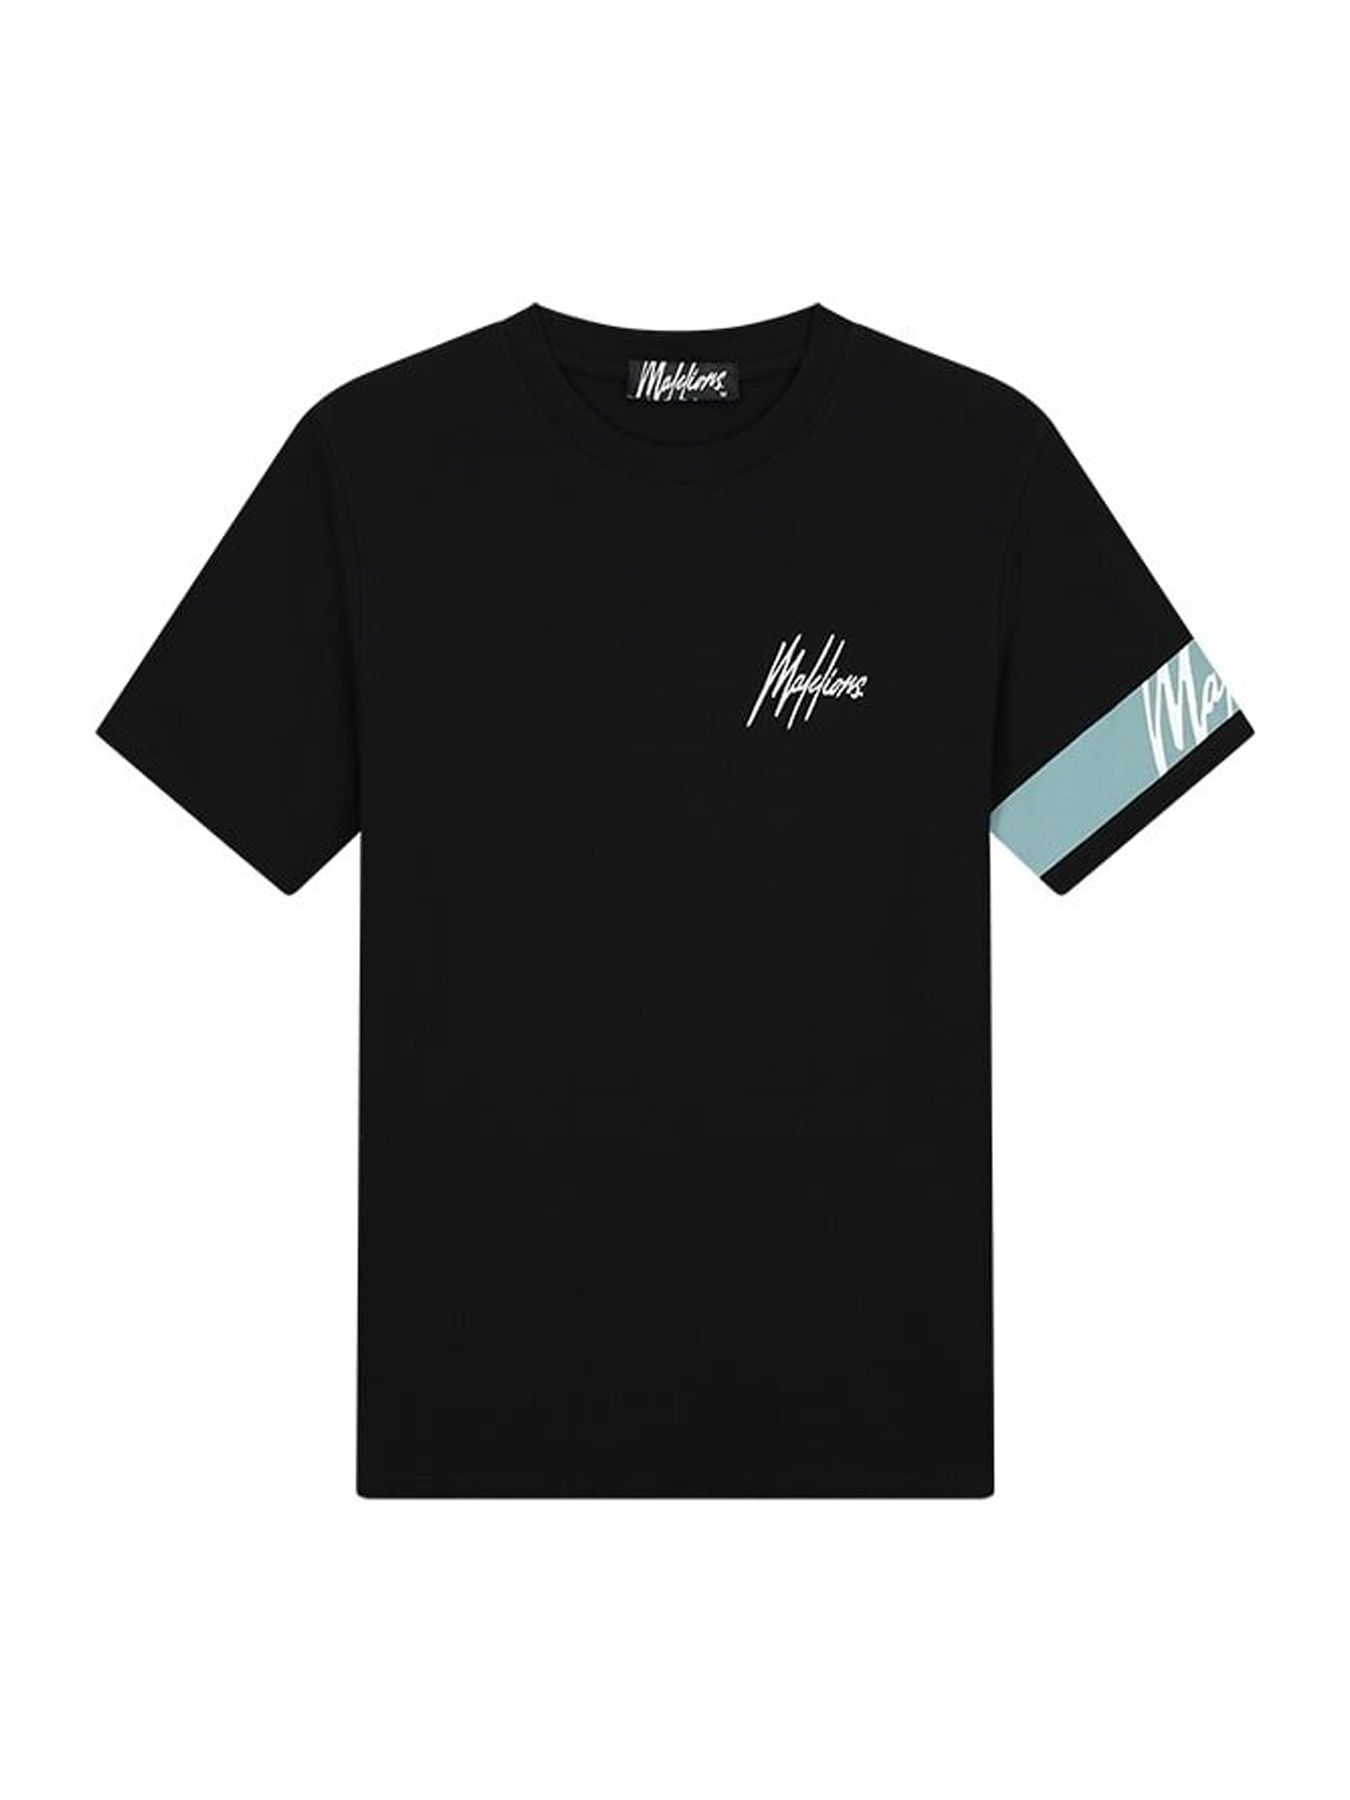 Malelions Men Captain t-shirt black/light blue 00108669-9101